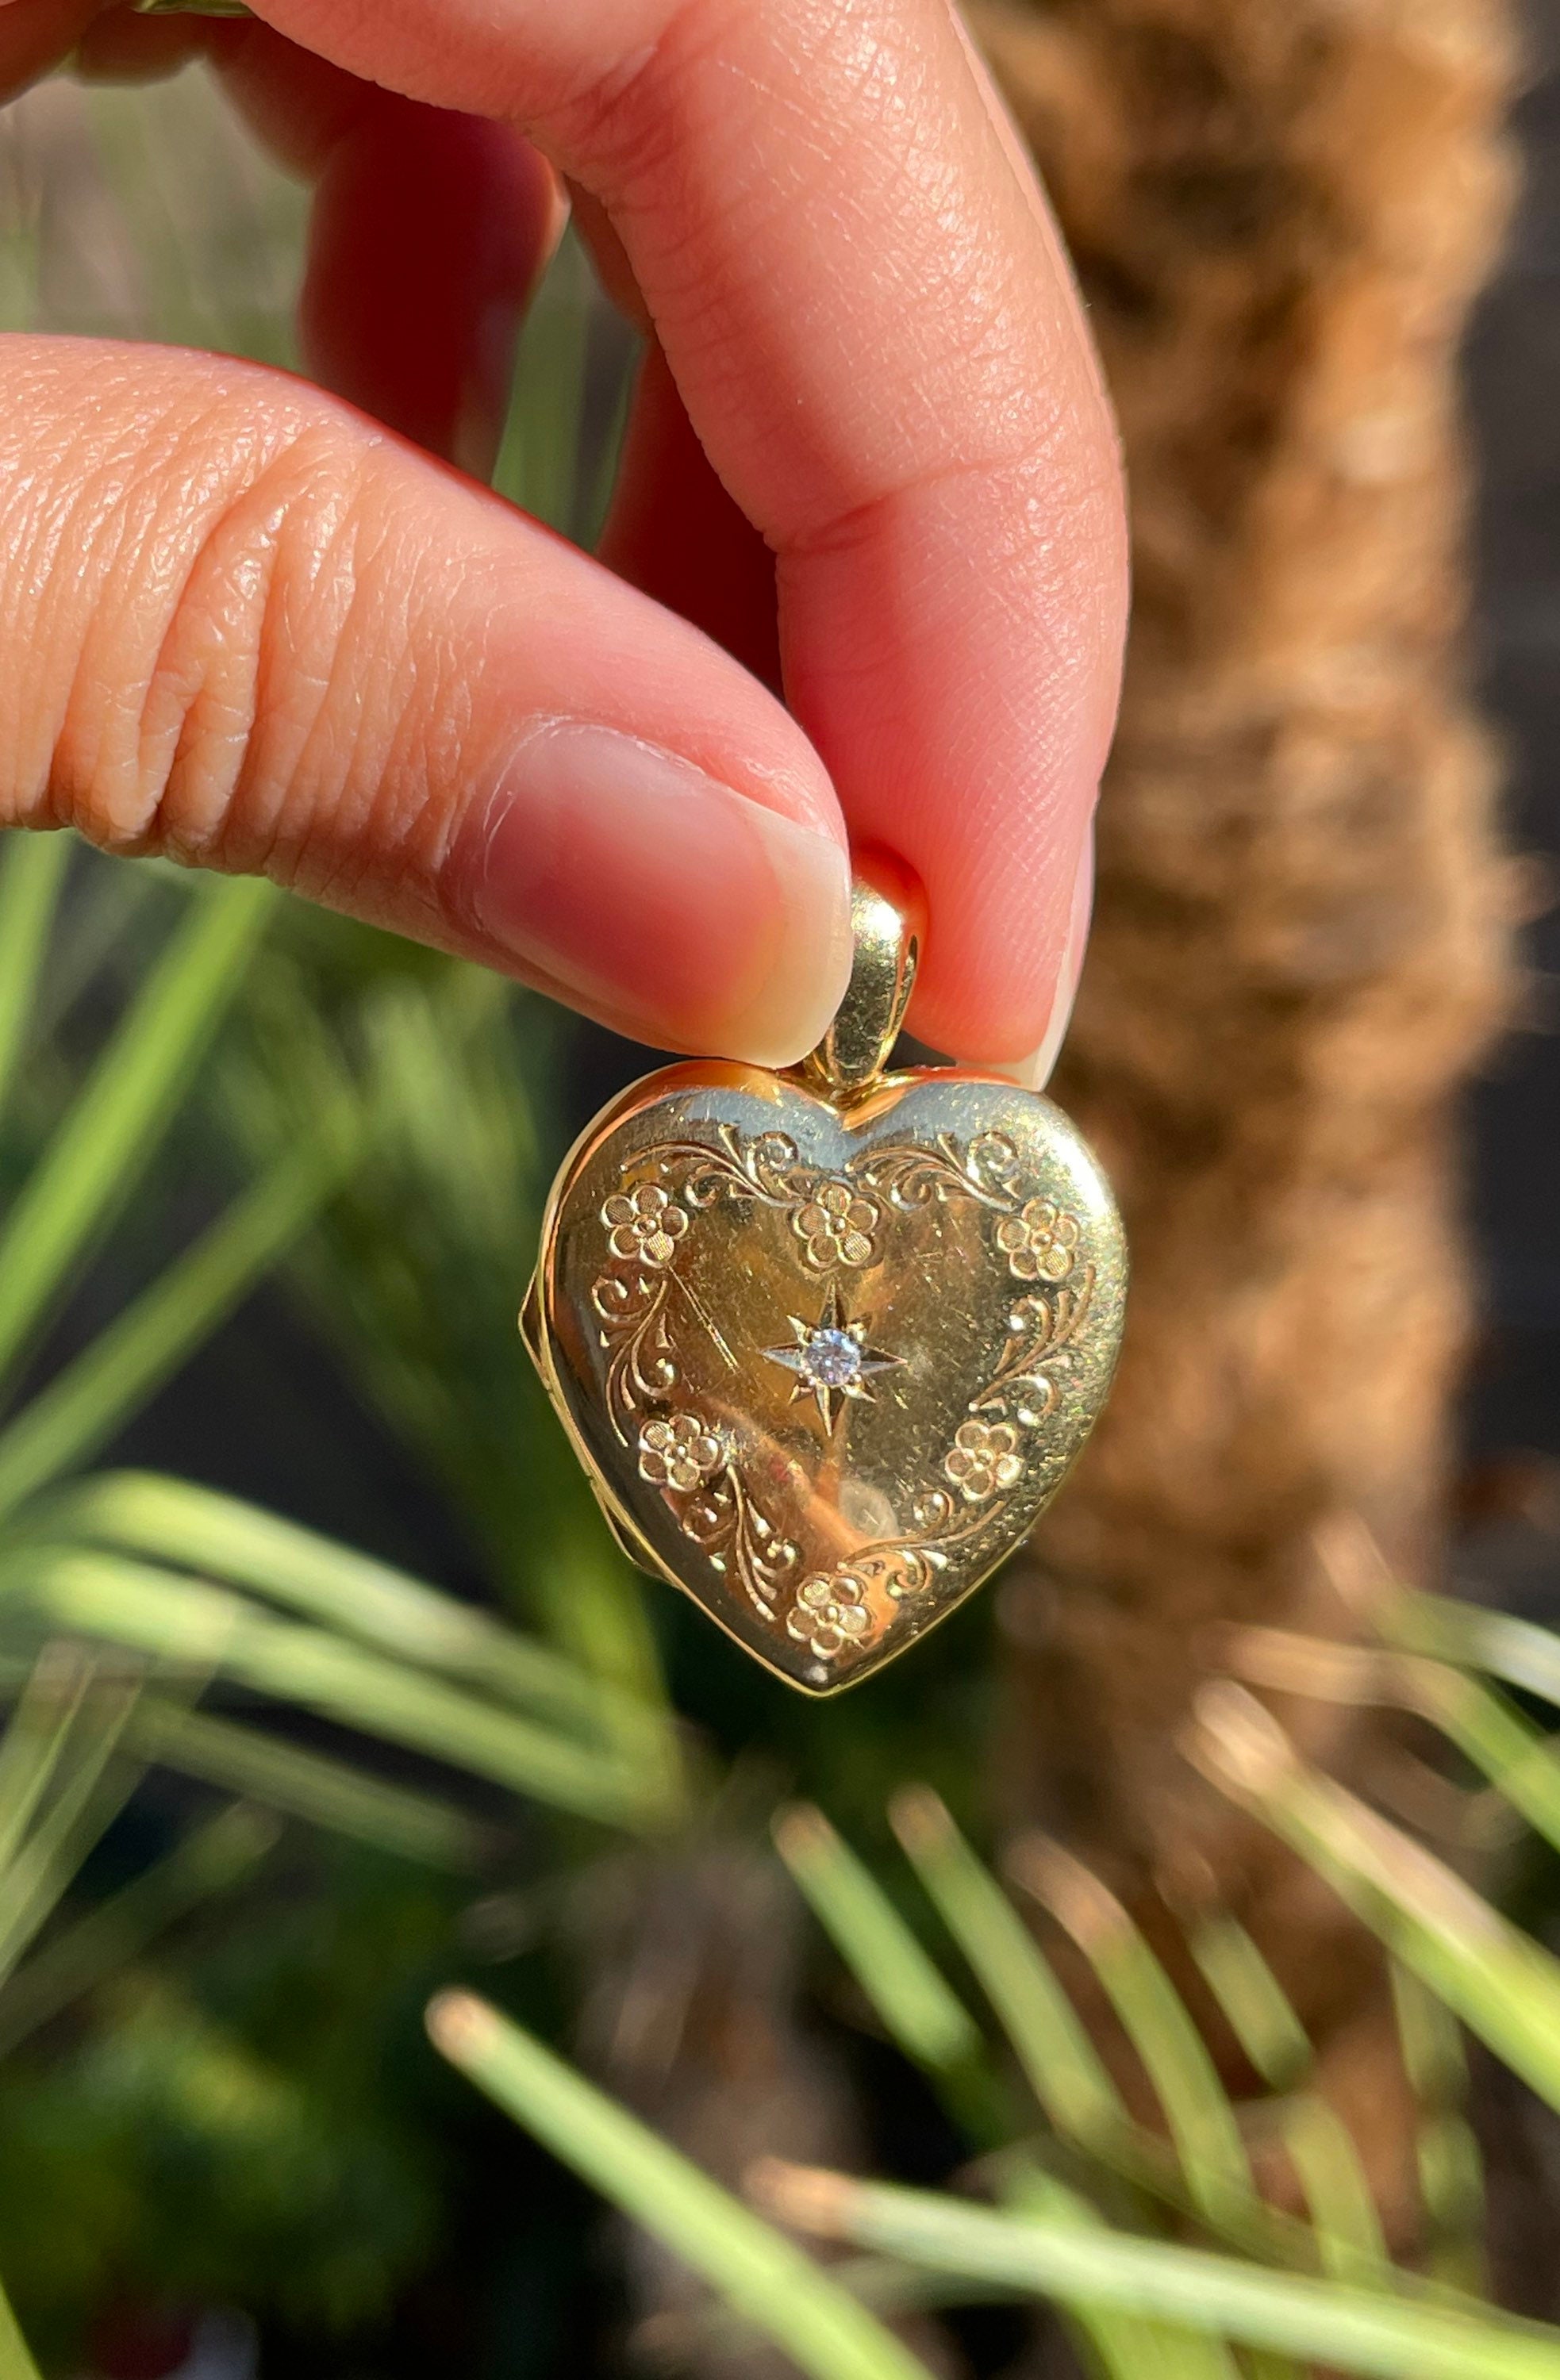 Tiffany & Co. Mini Heart Lock Necklace 18K Yellow Gold 750 Pendant